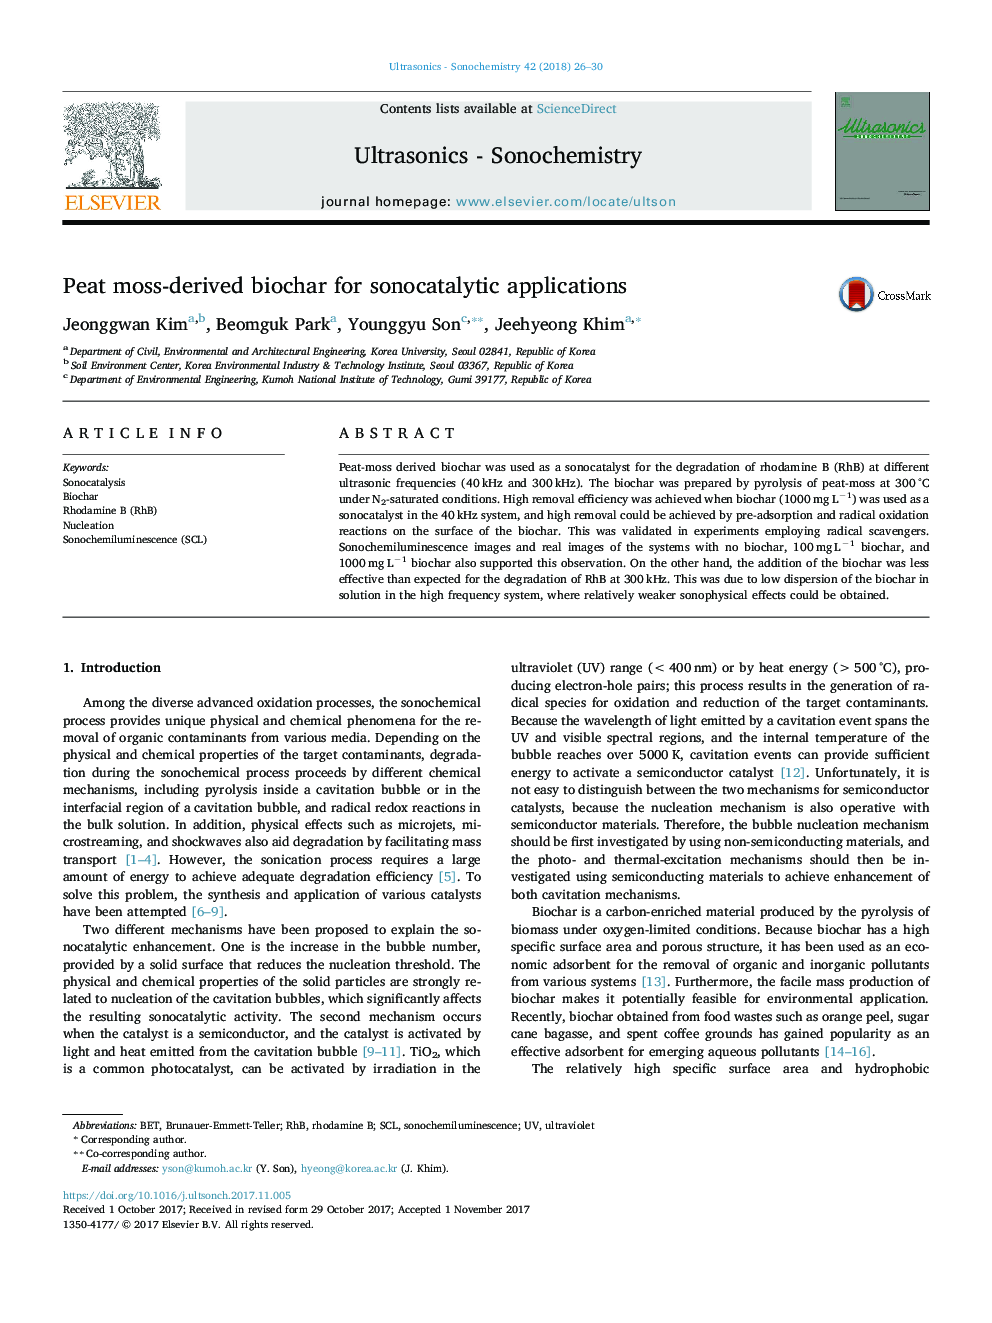 Peat moss-derived biochar for sonocatalytic applications